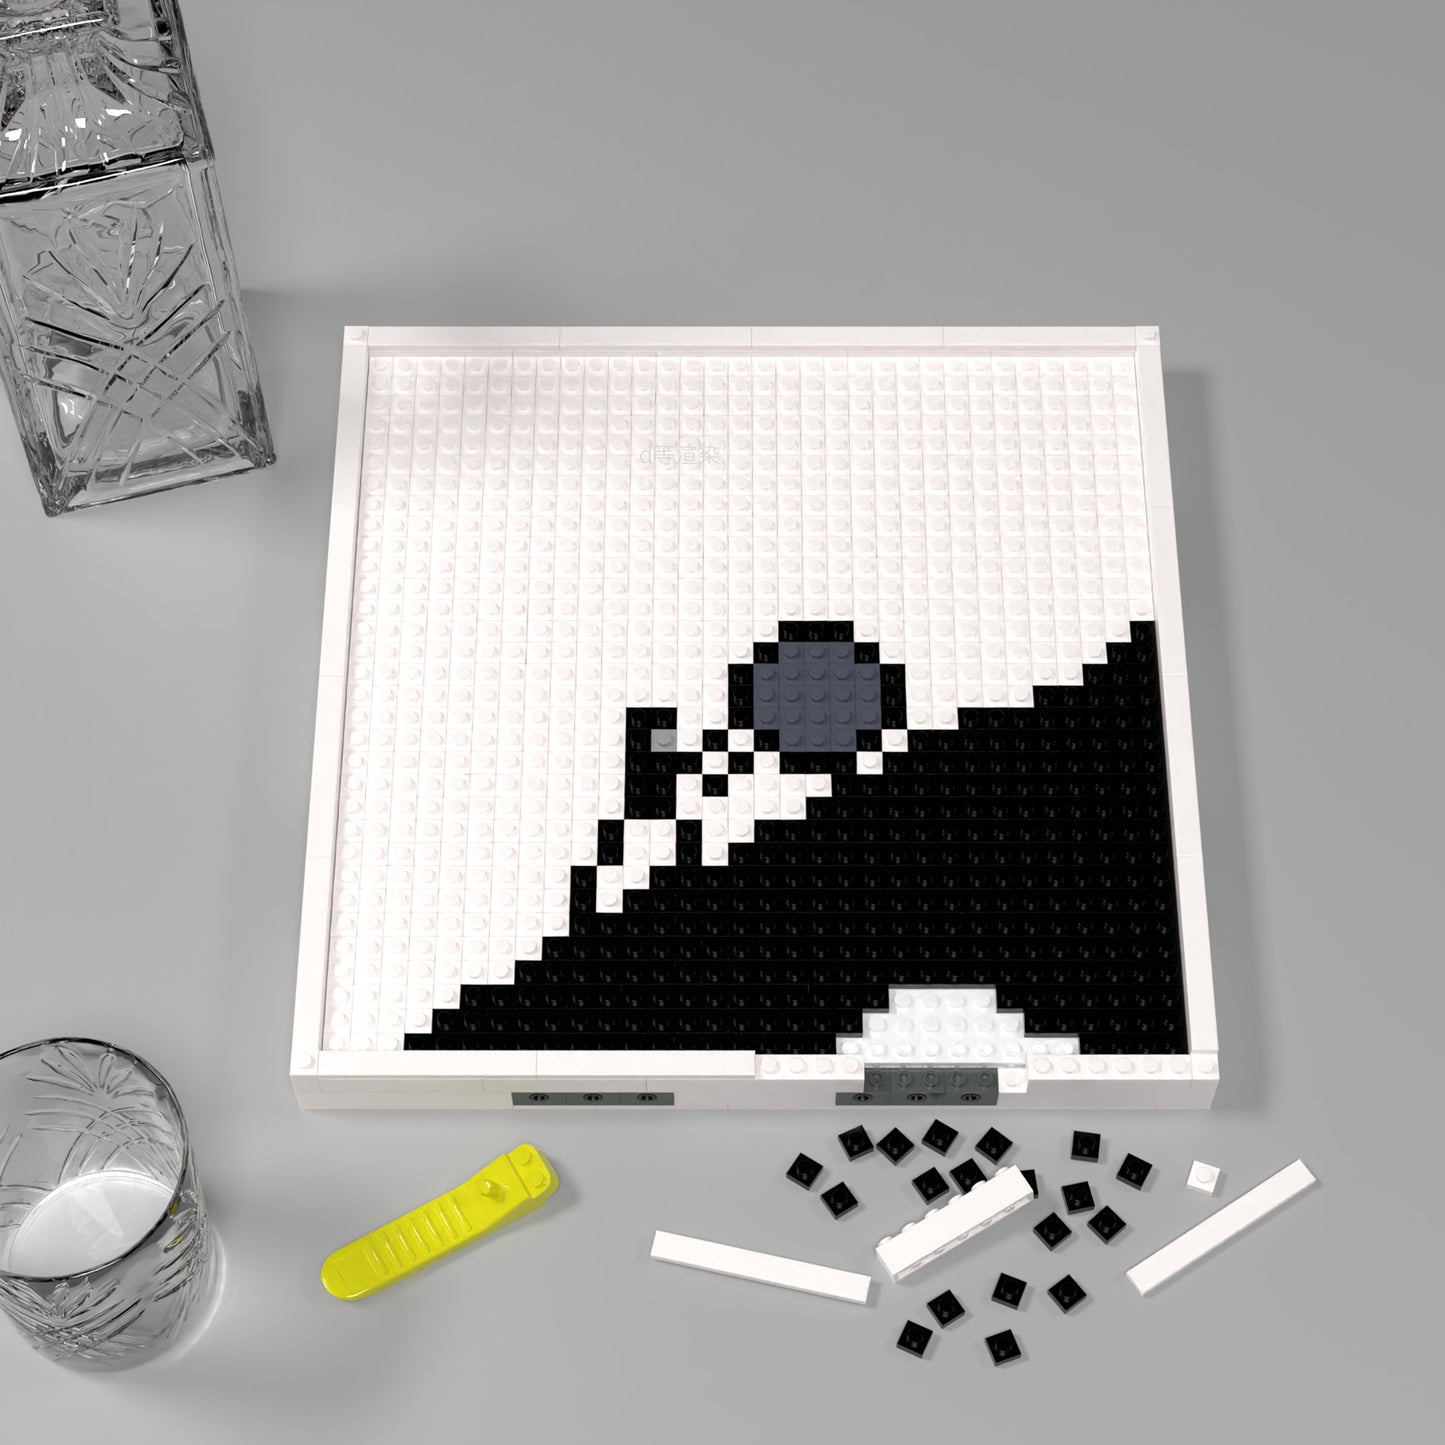 Sisyphus Building Brick Pixel Art - 32*32 Modular Compatible with Lego